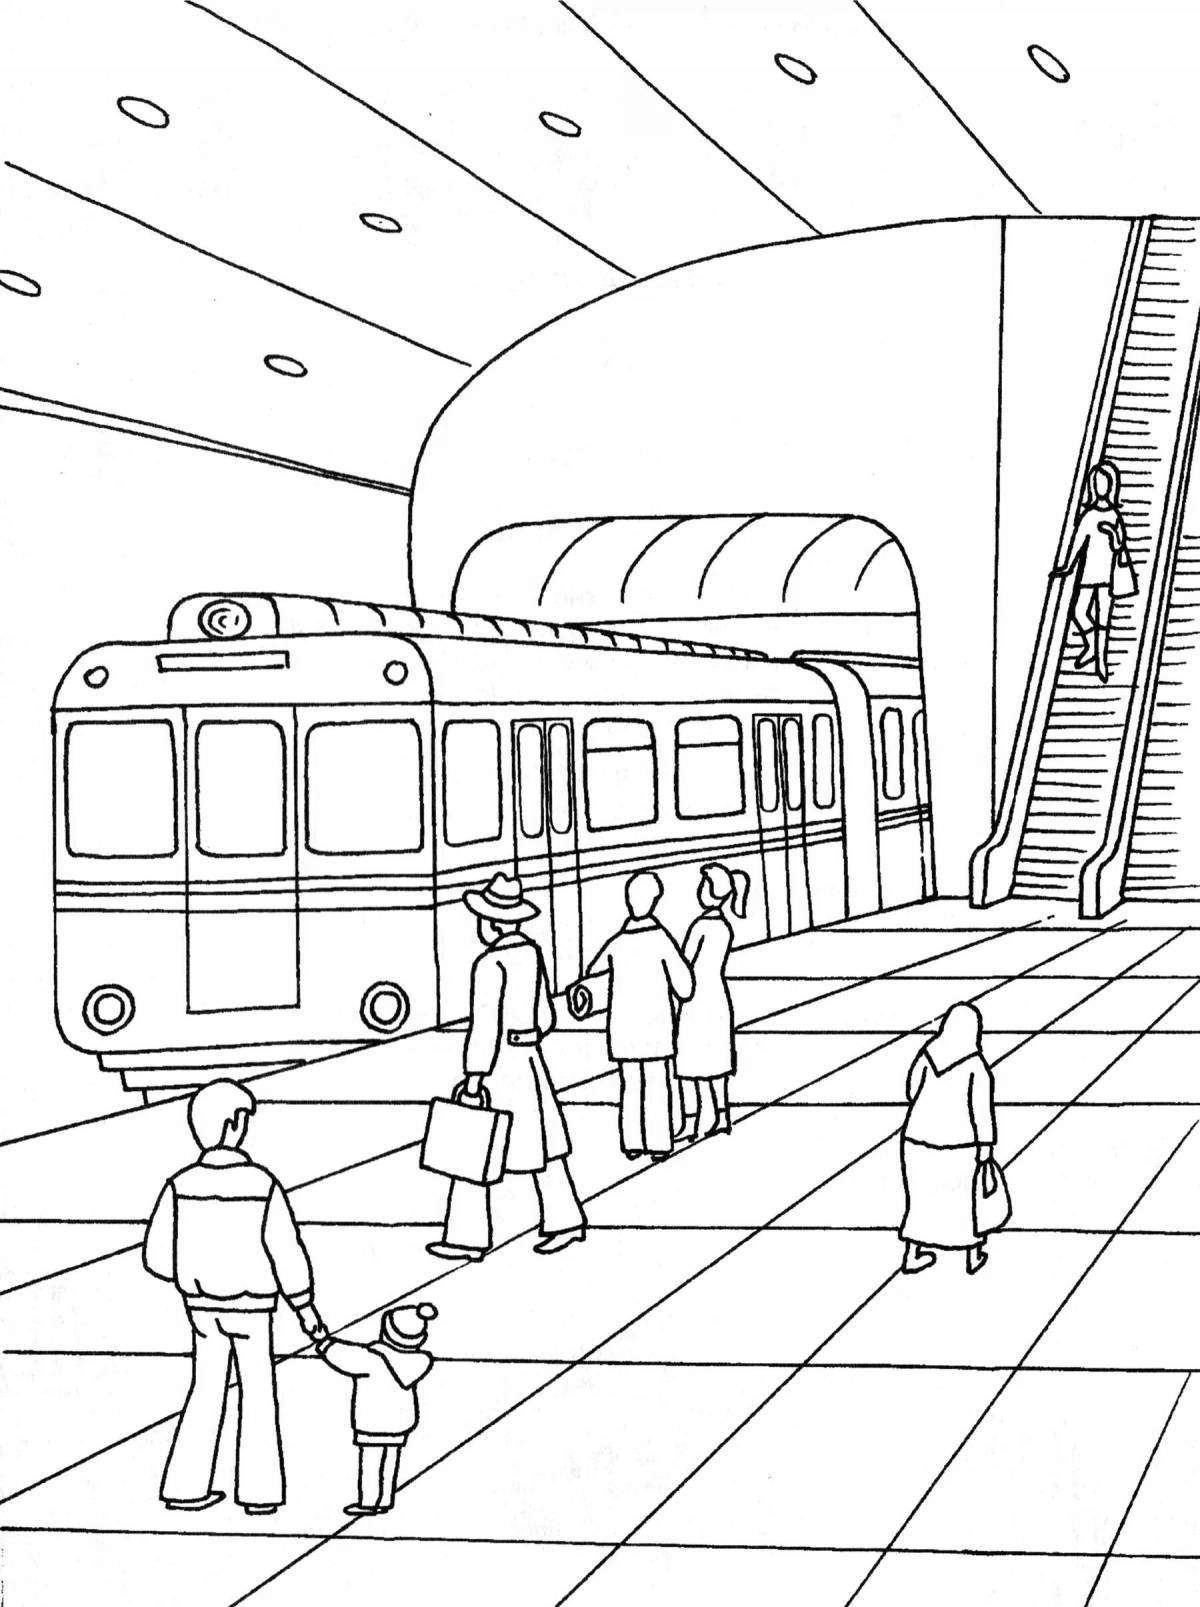 Детская раскраска метро colorful-trek